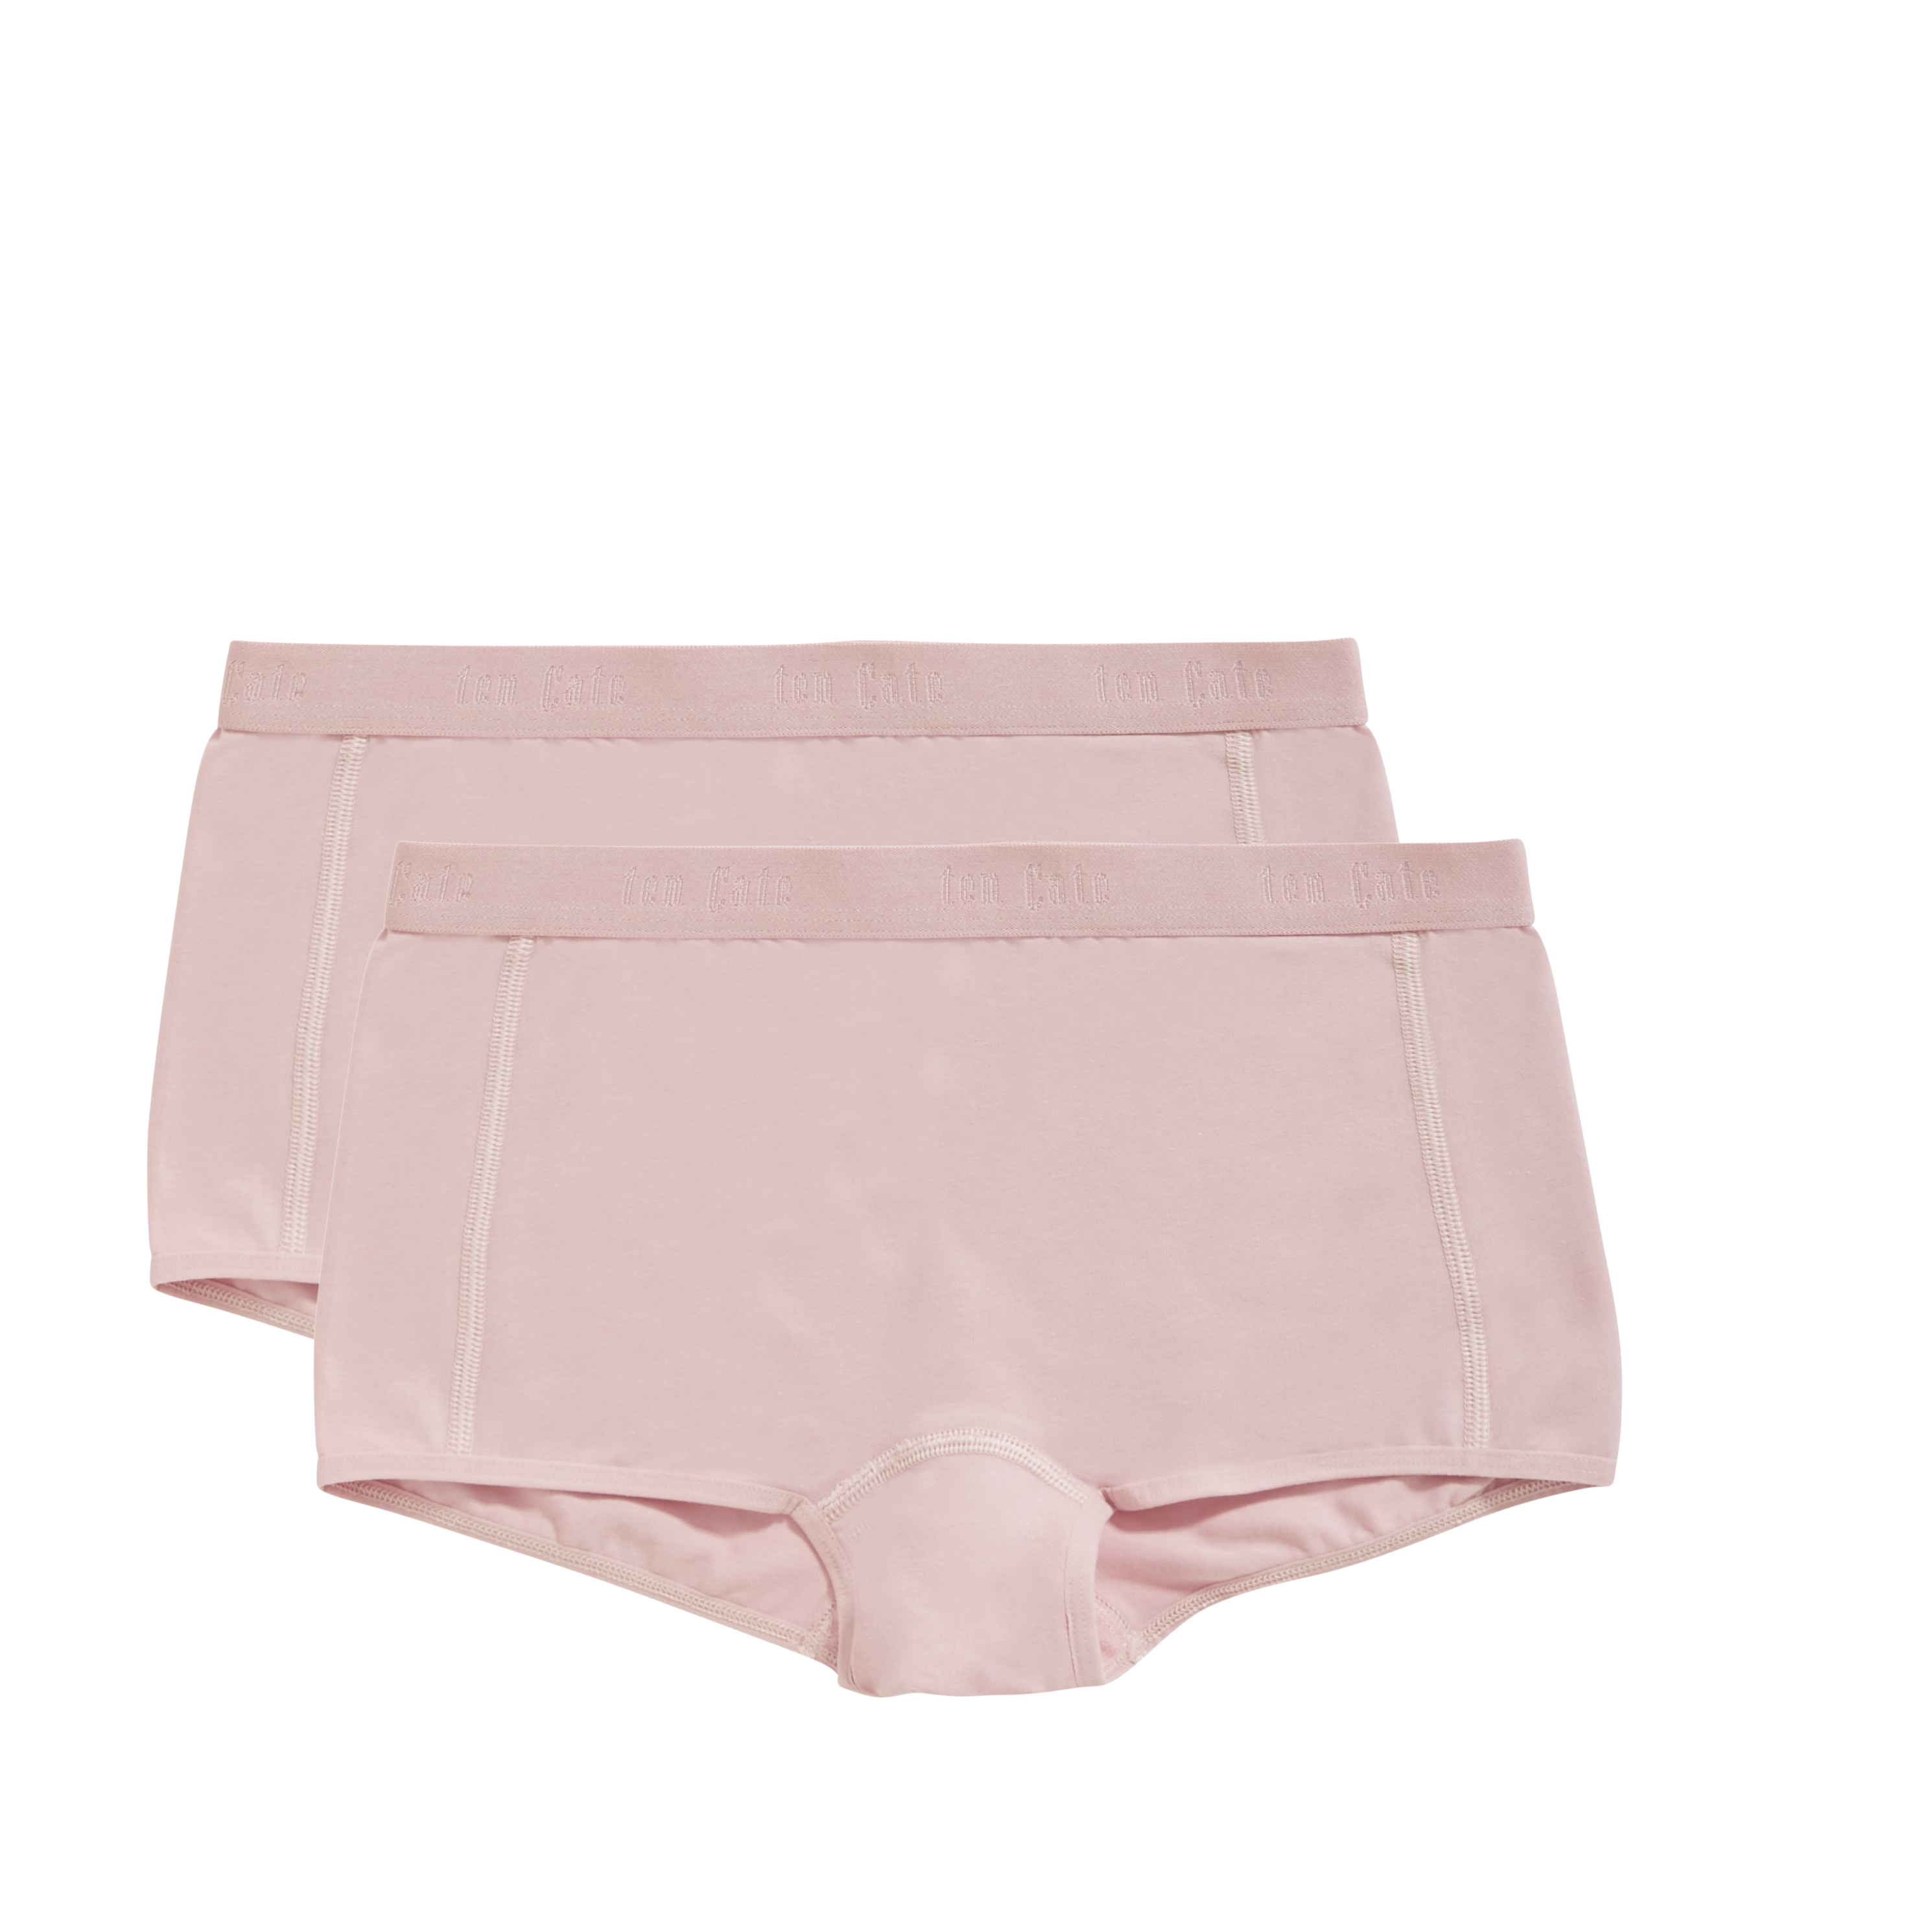 shorts ash pink 2 pack